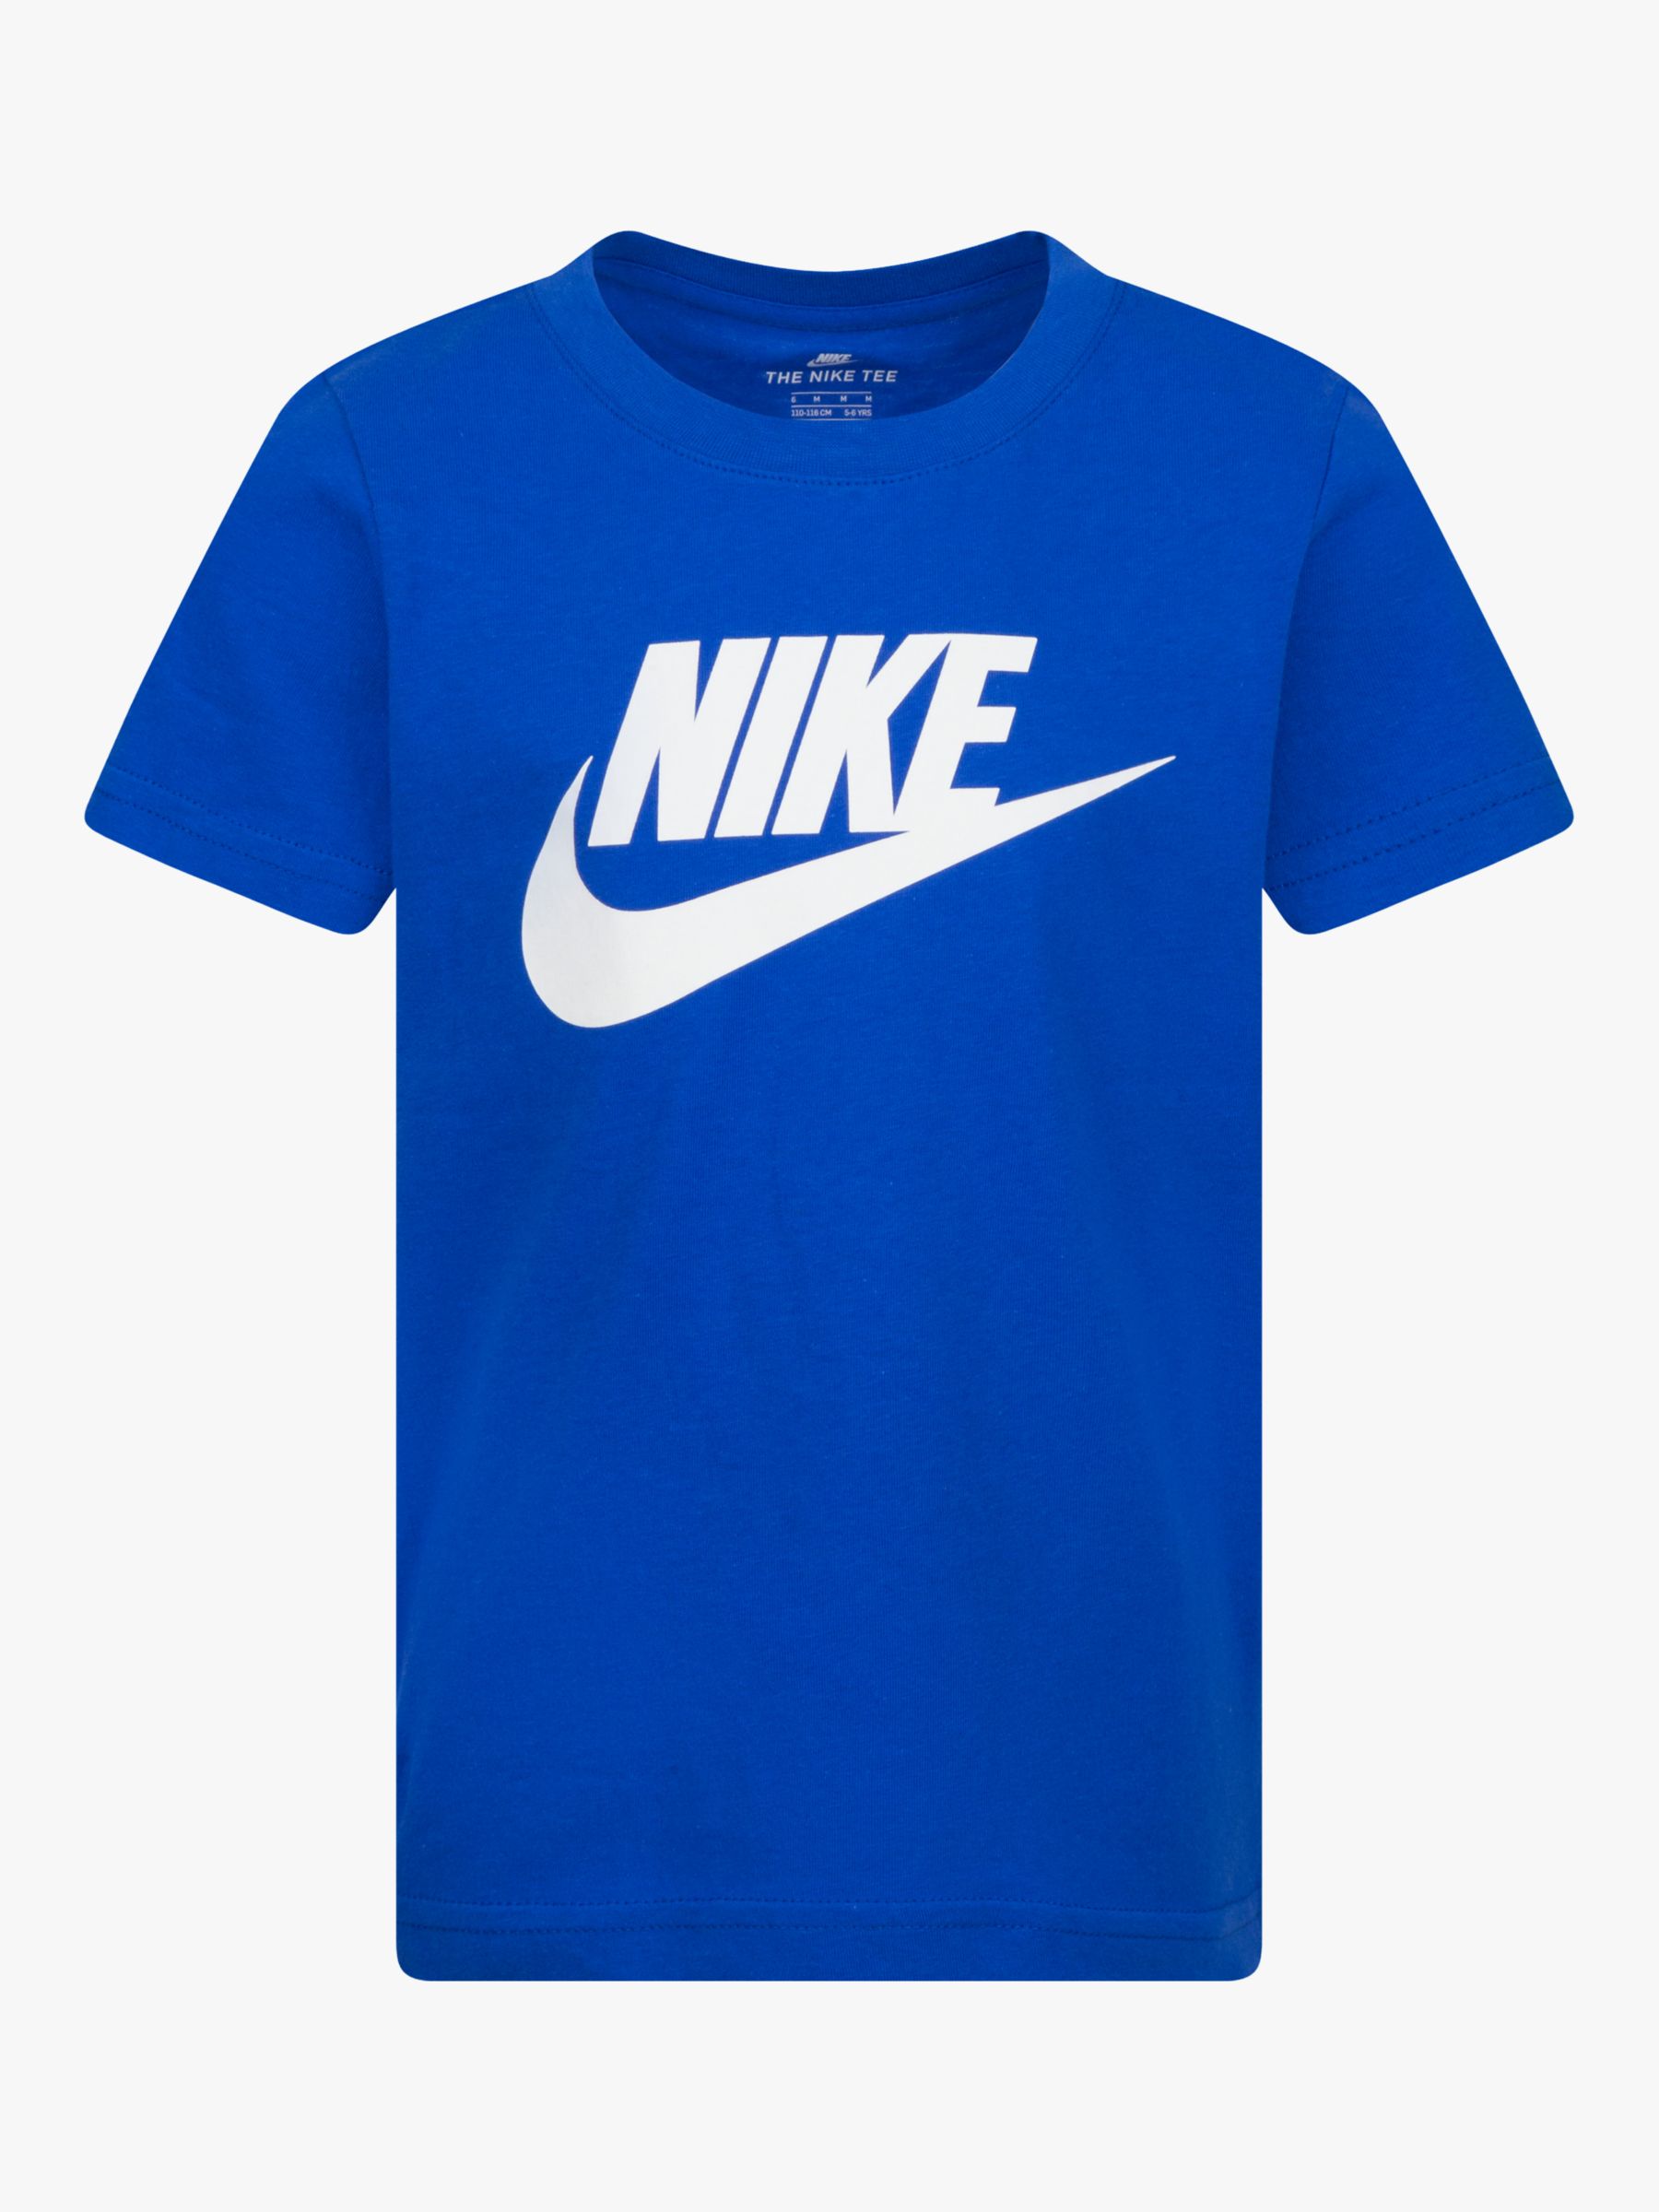 Bedachtzaam Pickering in het geheim Nike Kids' Logo Short Sleeve T-Shirt, Royal Blue at John Lewis & Partners